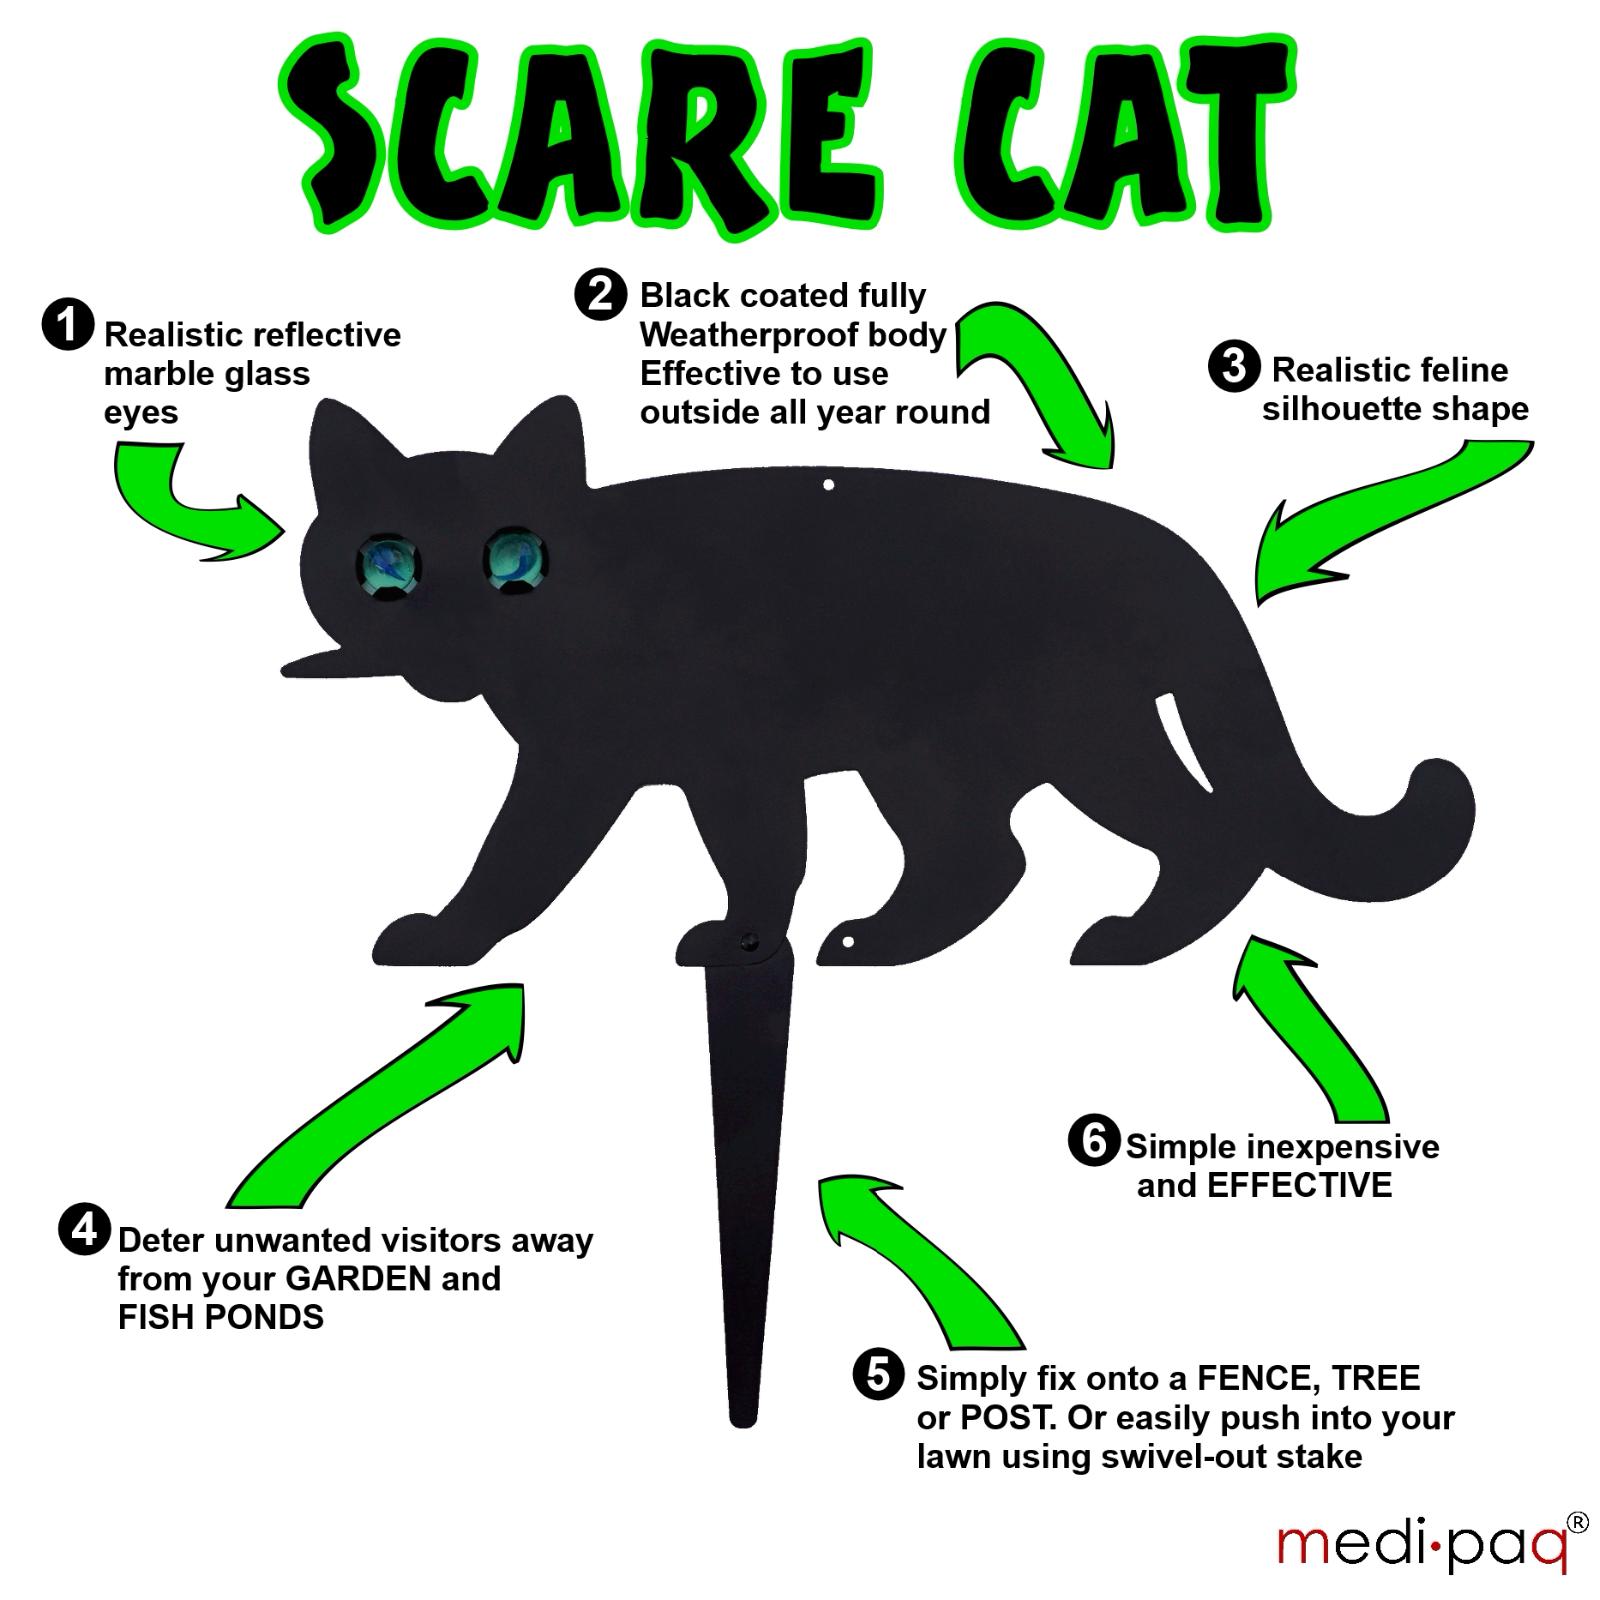 cat pest control garden scare scarer deterrent scarecrow repel 2x cats stop medipaq